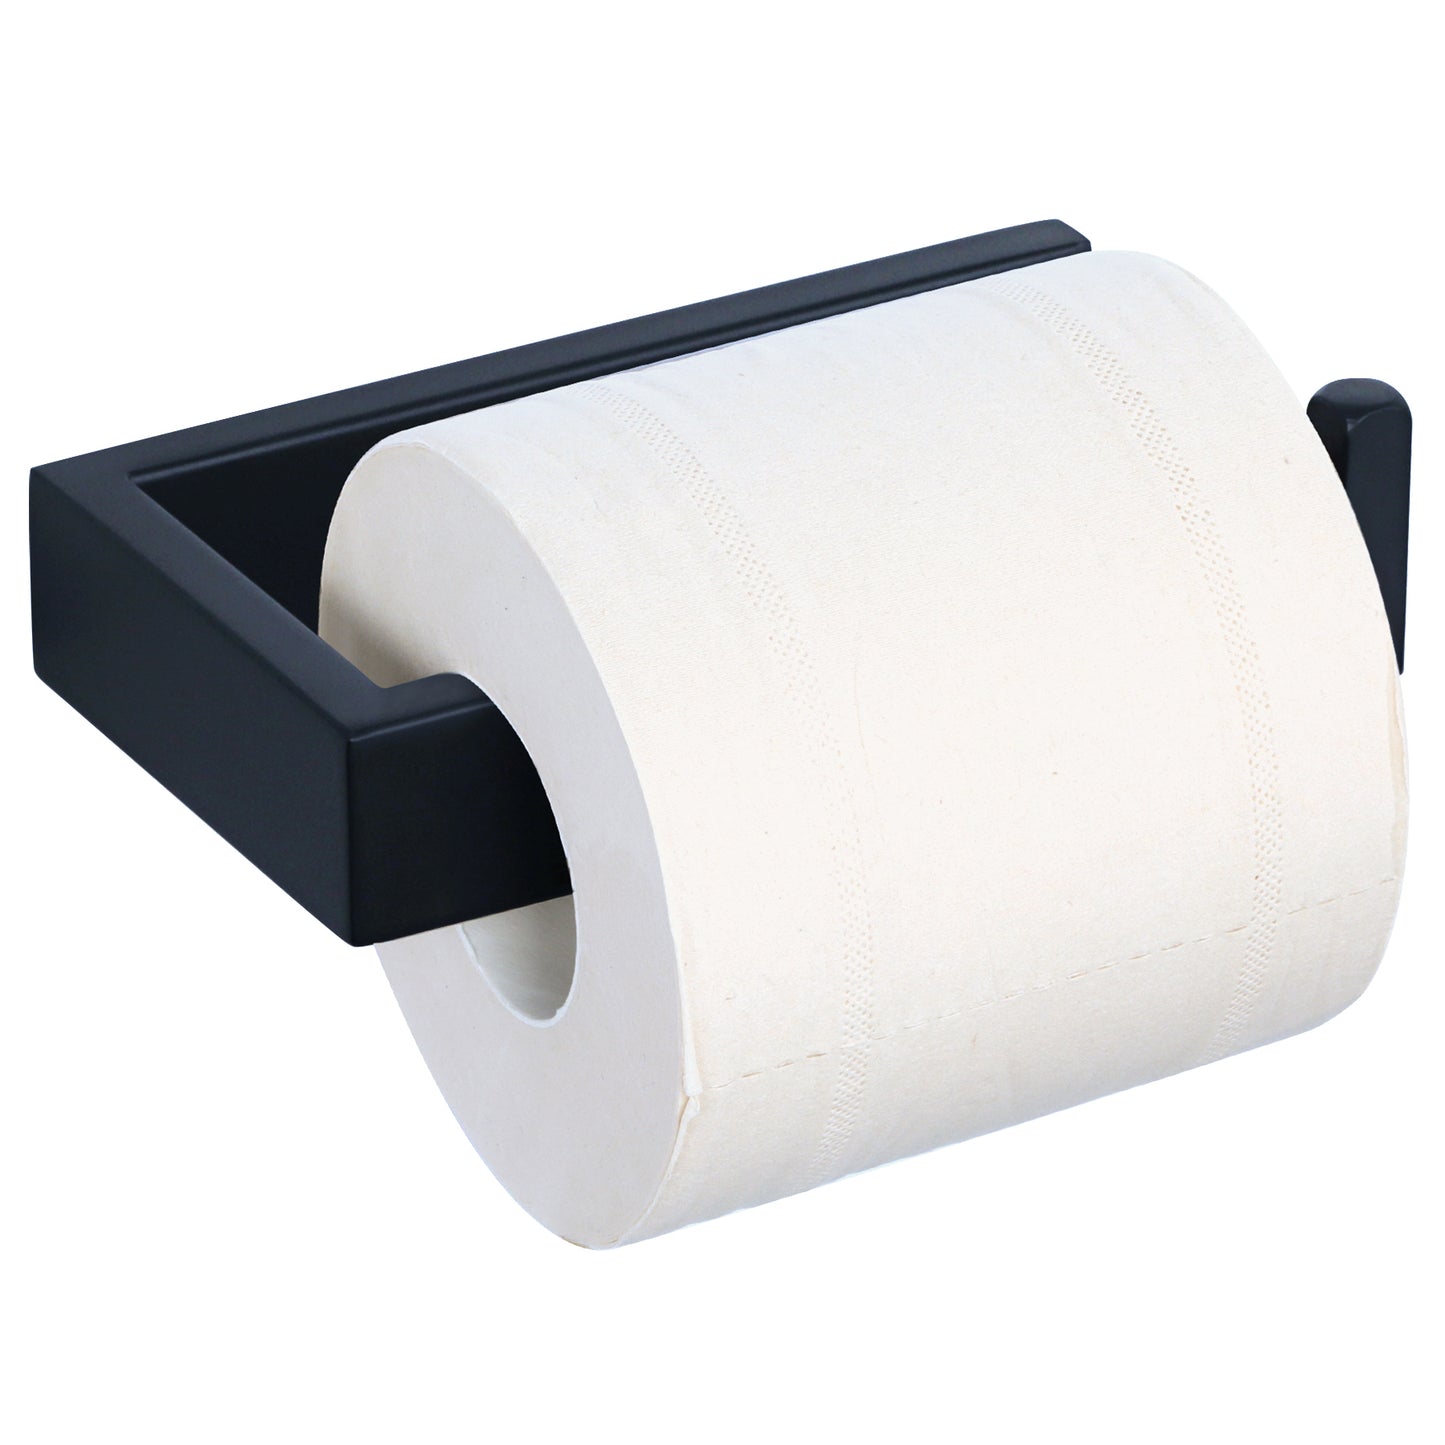 Studio® S Toilet Paper Holder